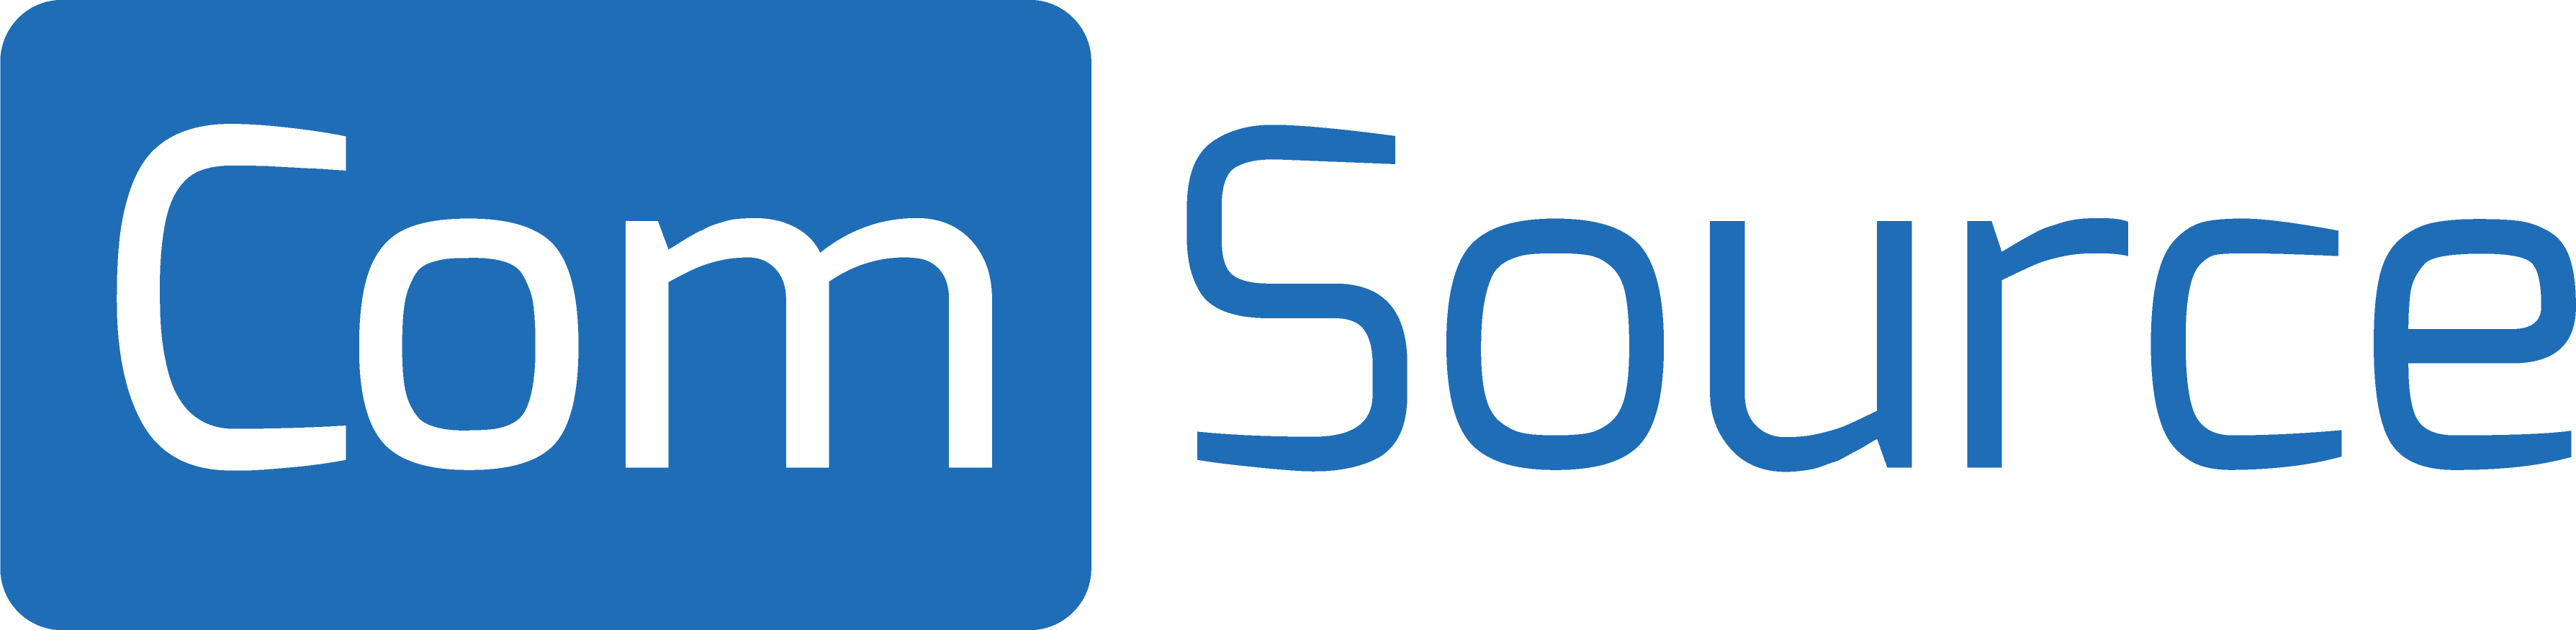 comsource logo